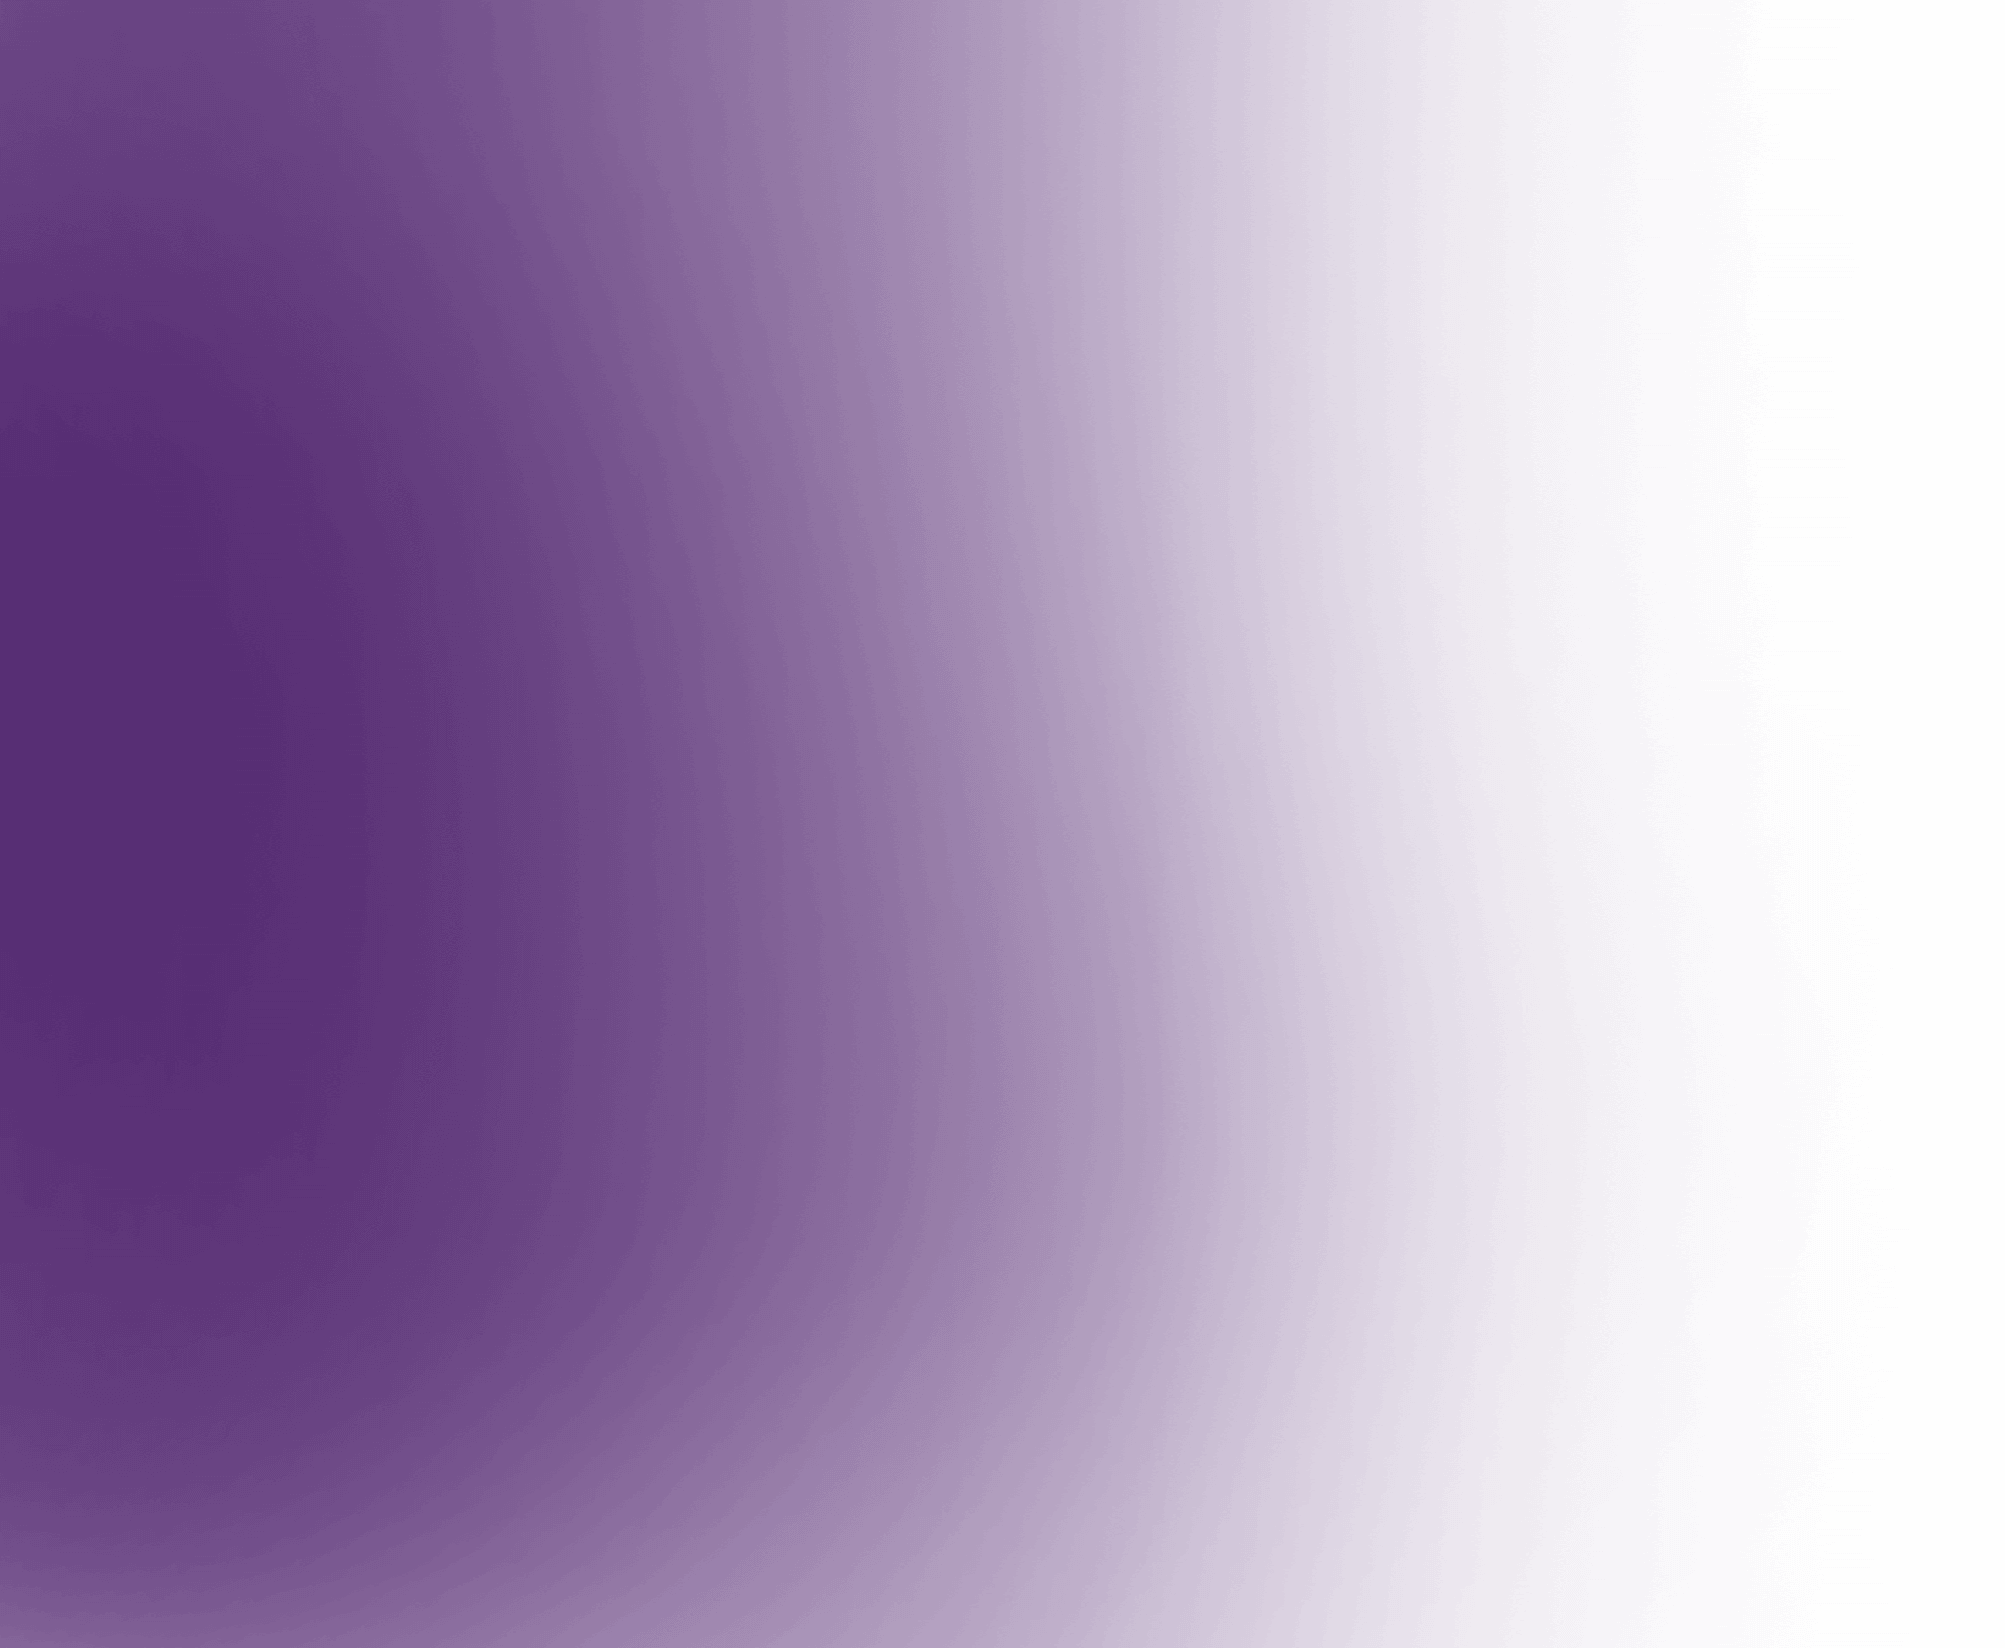 Download Lavender Gradient - Purple Gradient Transparent Background PNG  Image with No Background 